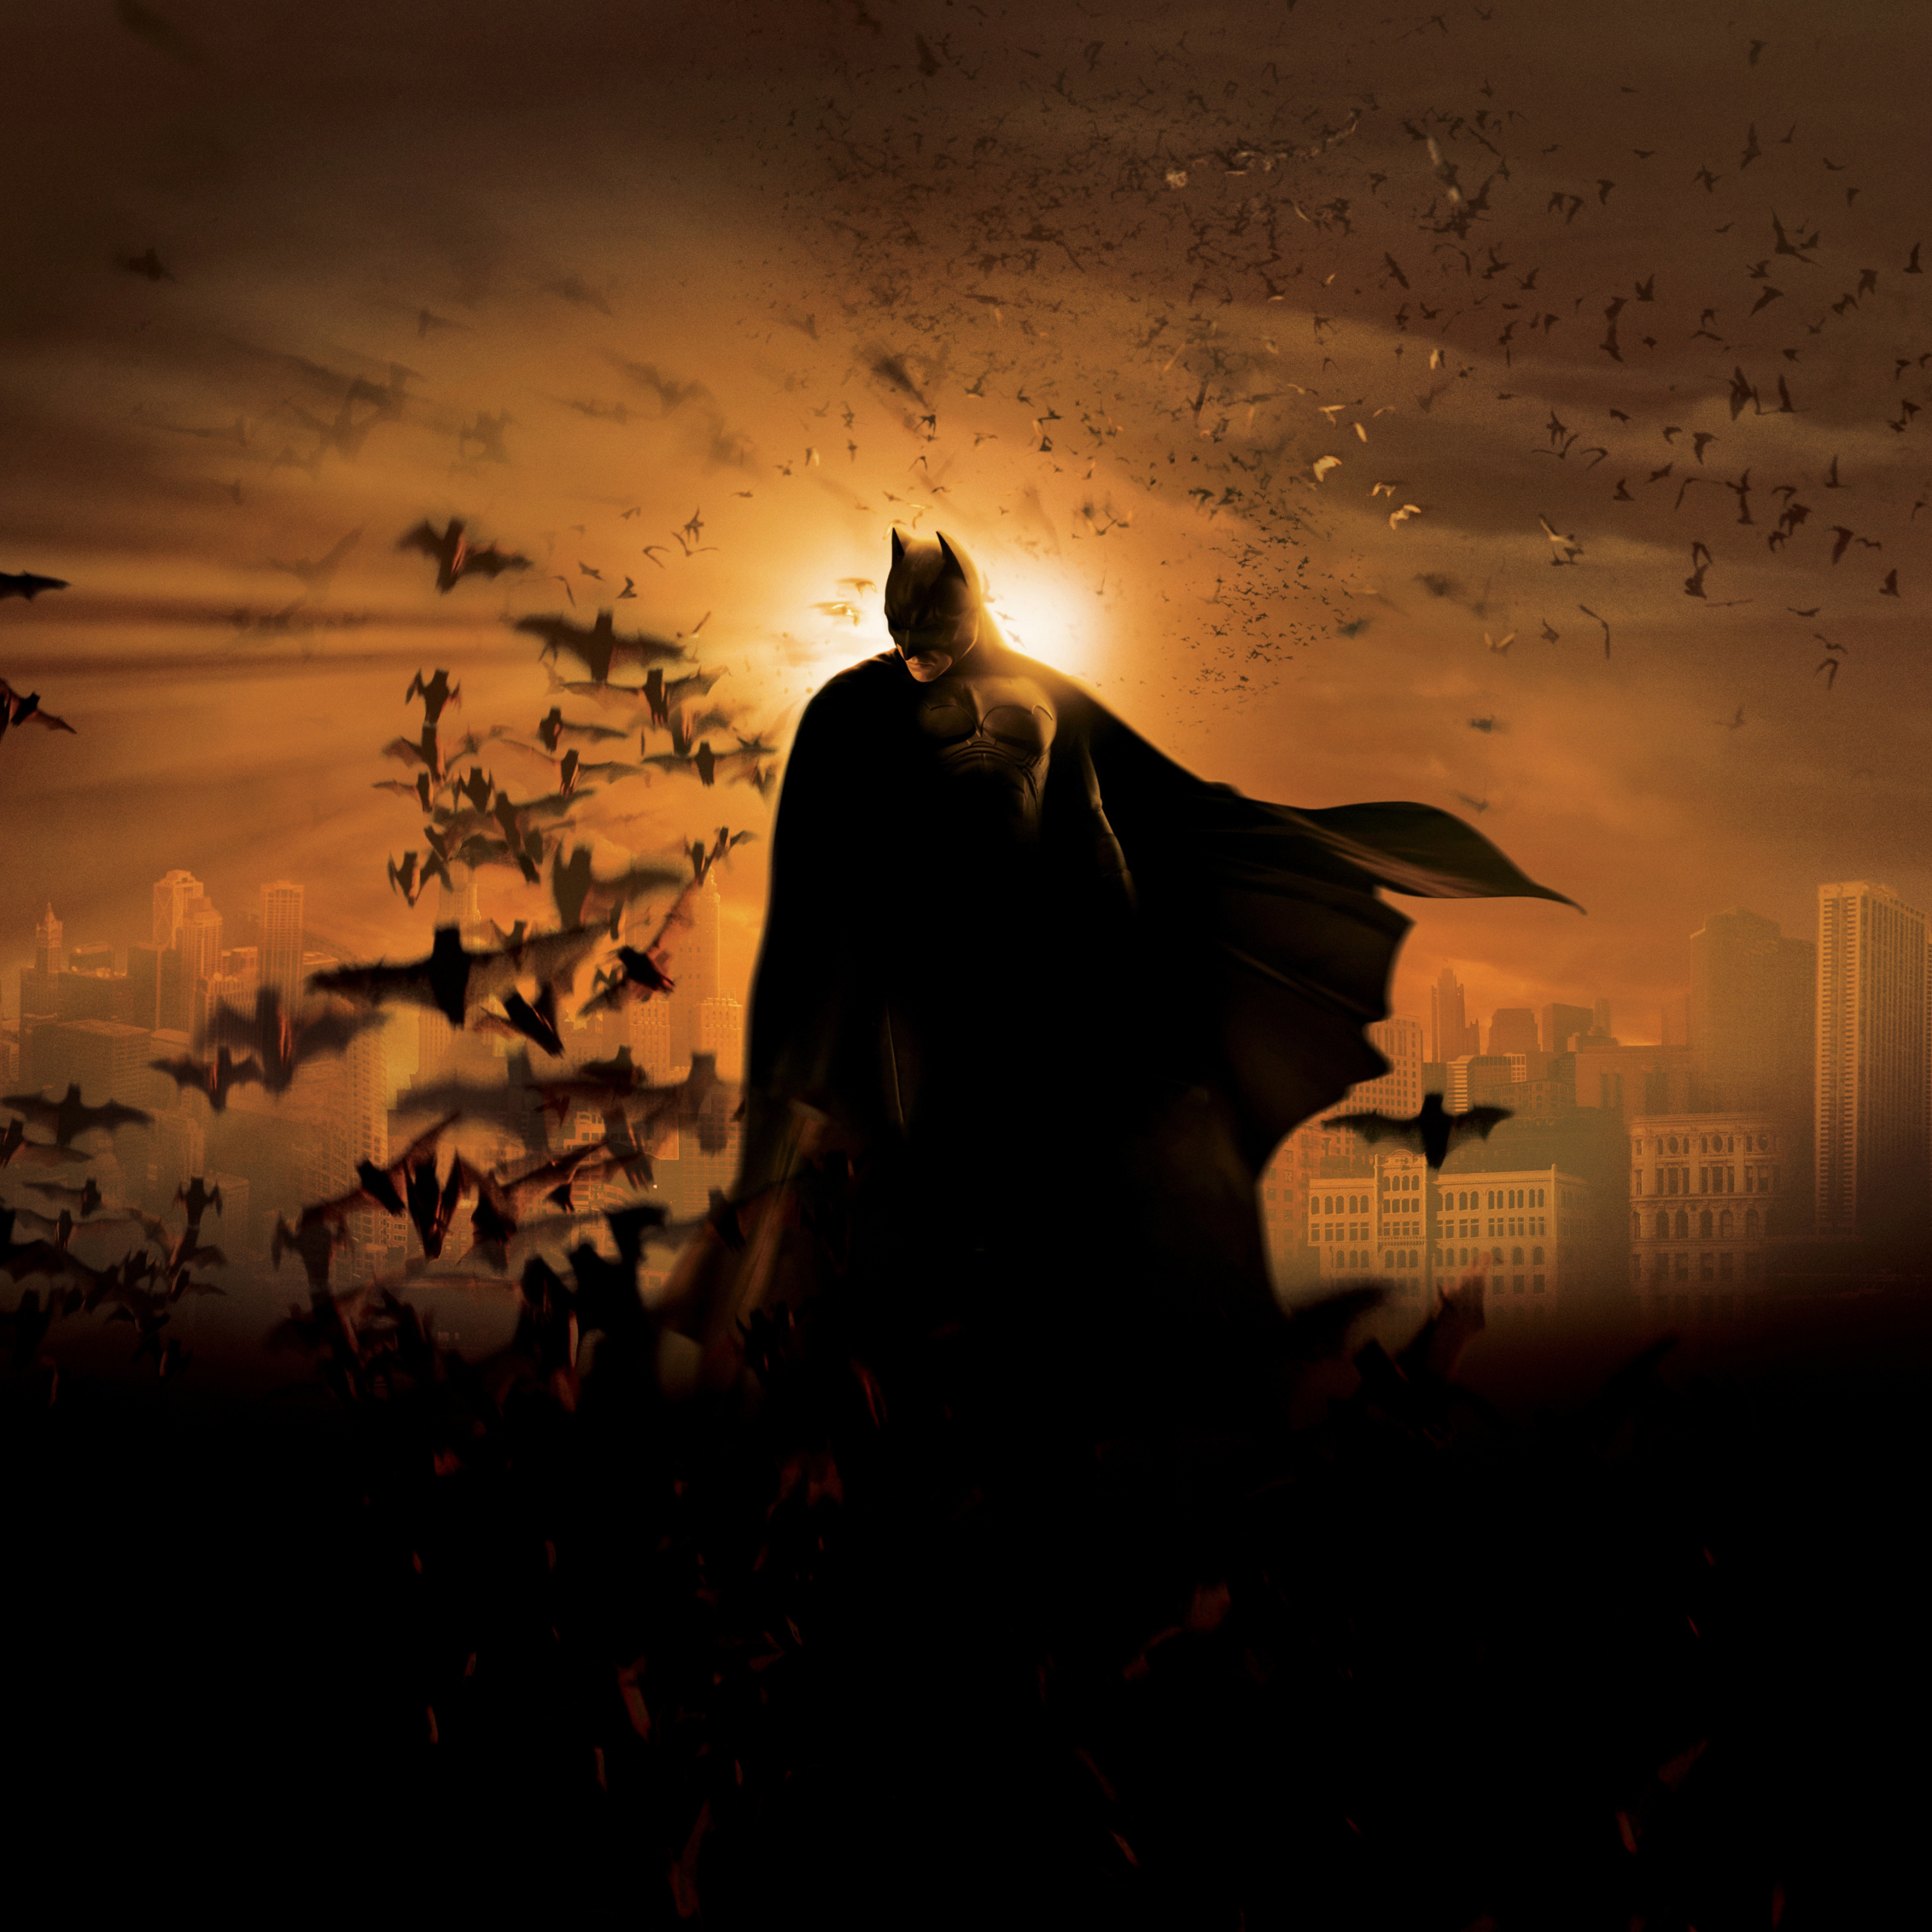 Batman начало. Batman begins 2005 poster. Бэтмен первый Нолана. Бэтмен начало (2005) Cover.